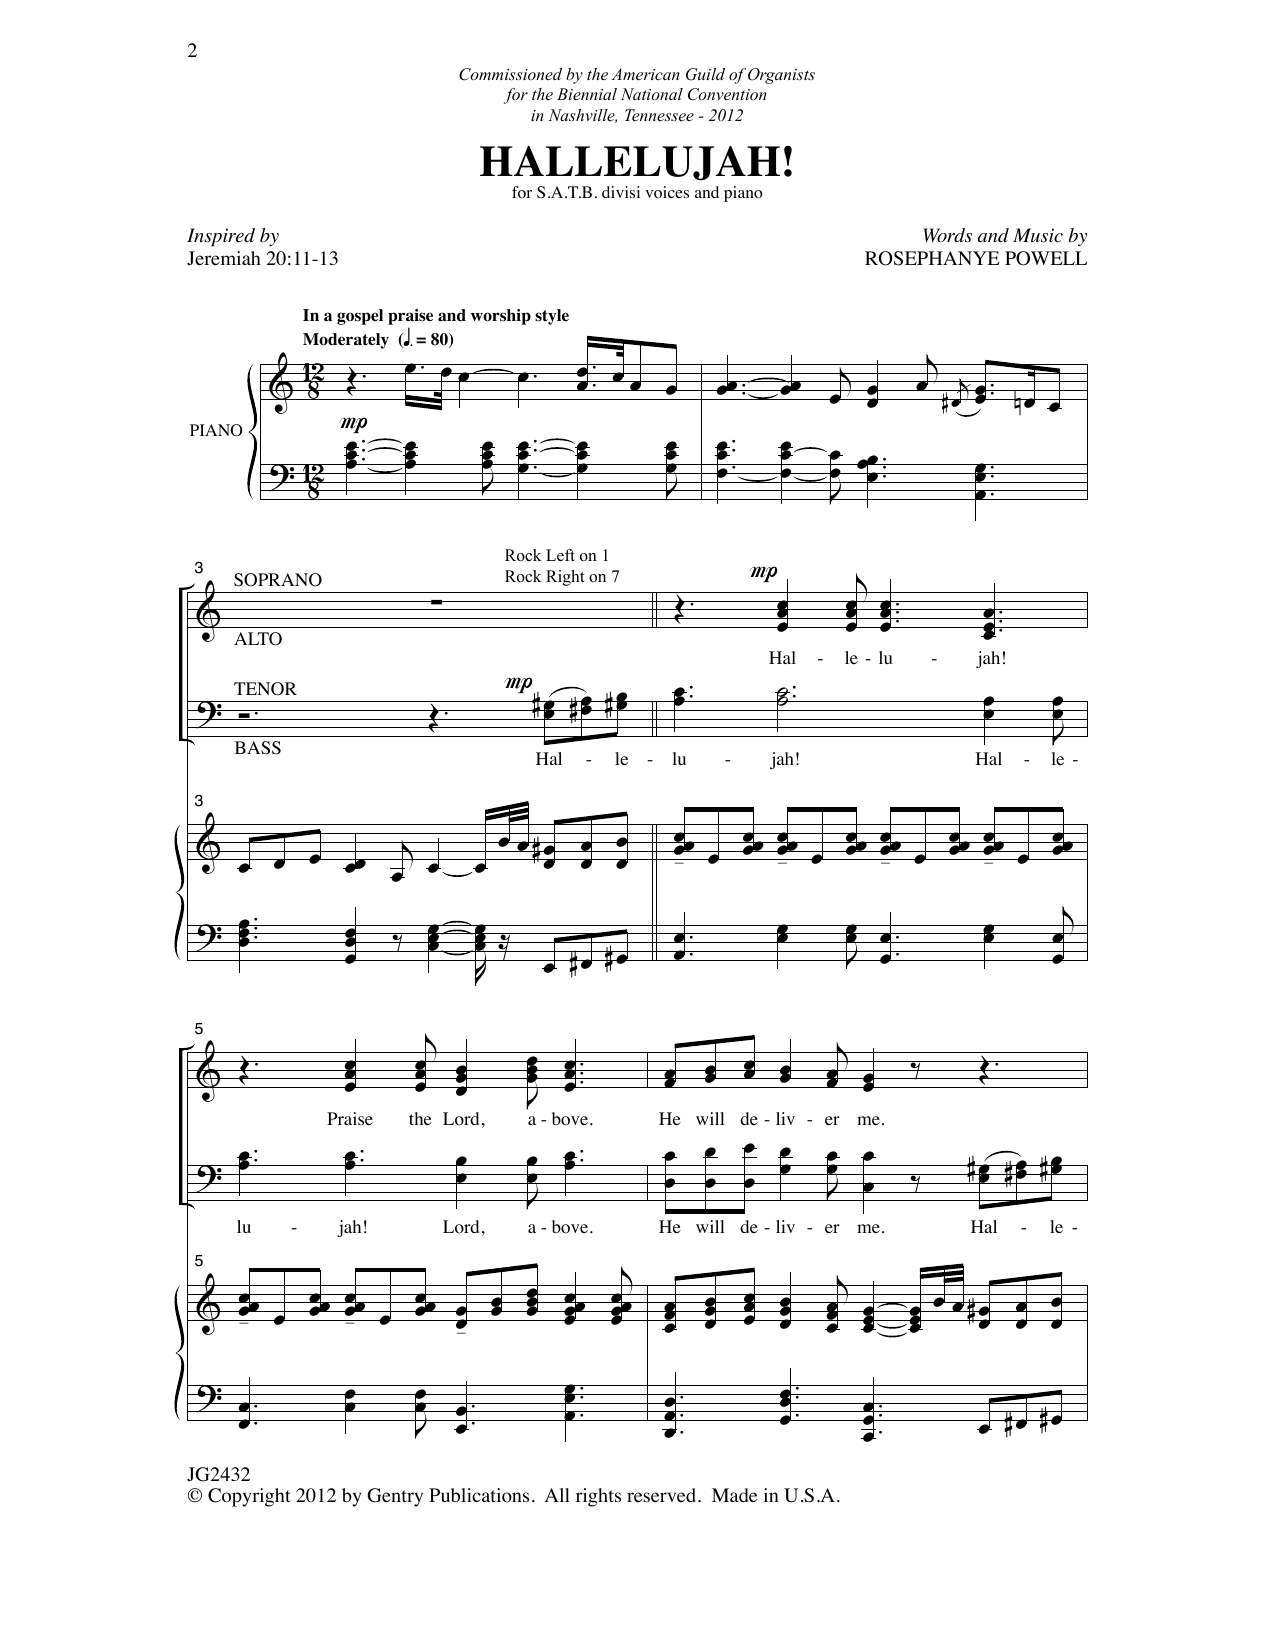 Rosephanye Powell Hallelujah! Sheet Music Notes & Chords for SATB Choir - Download or Print PDF